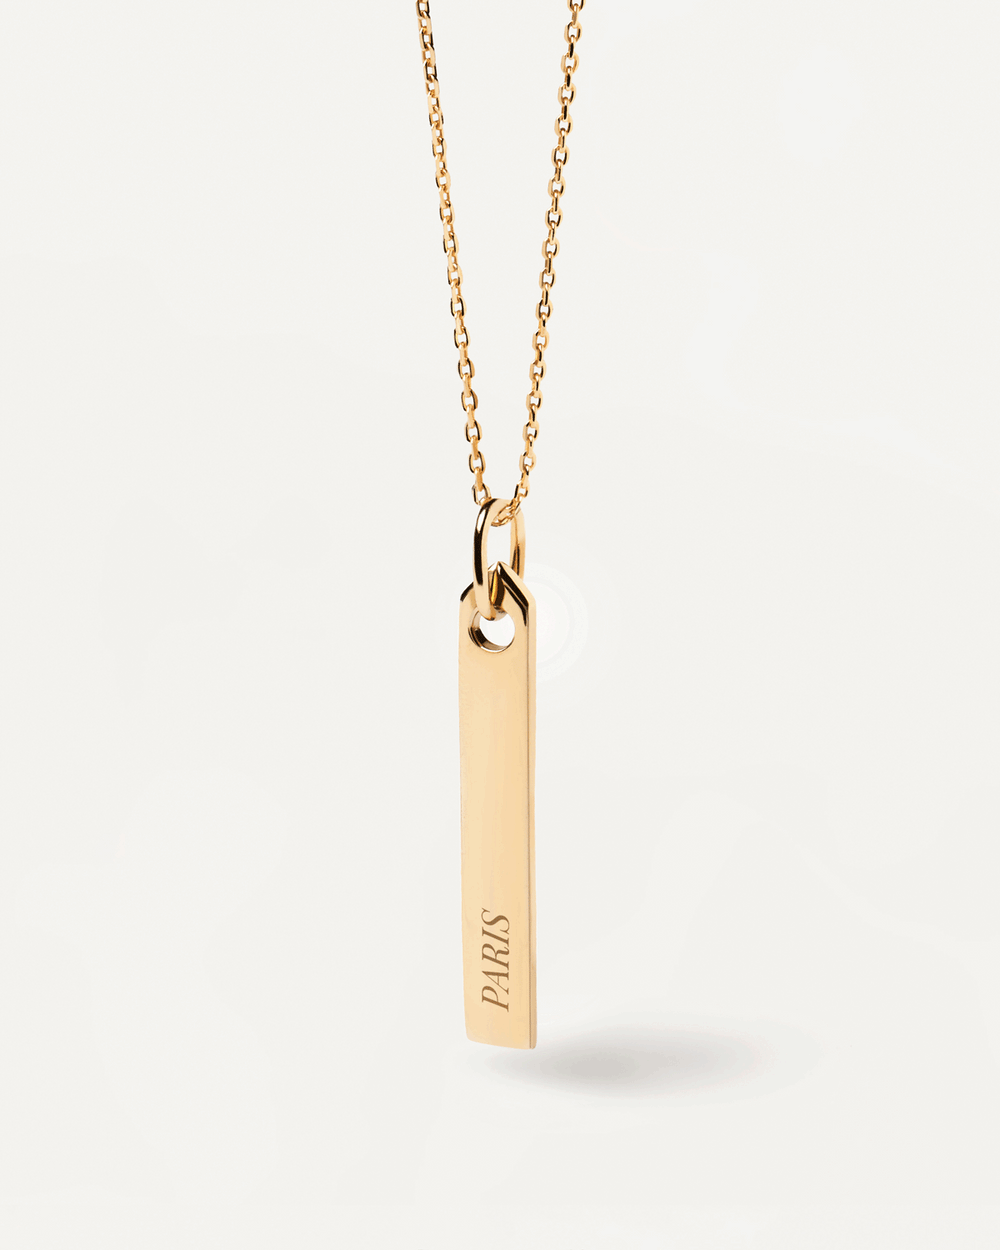 LV Flame design necklace